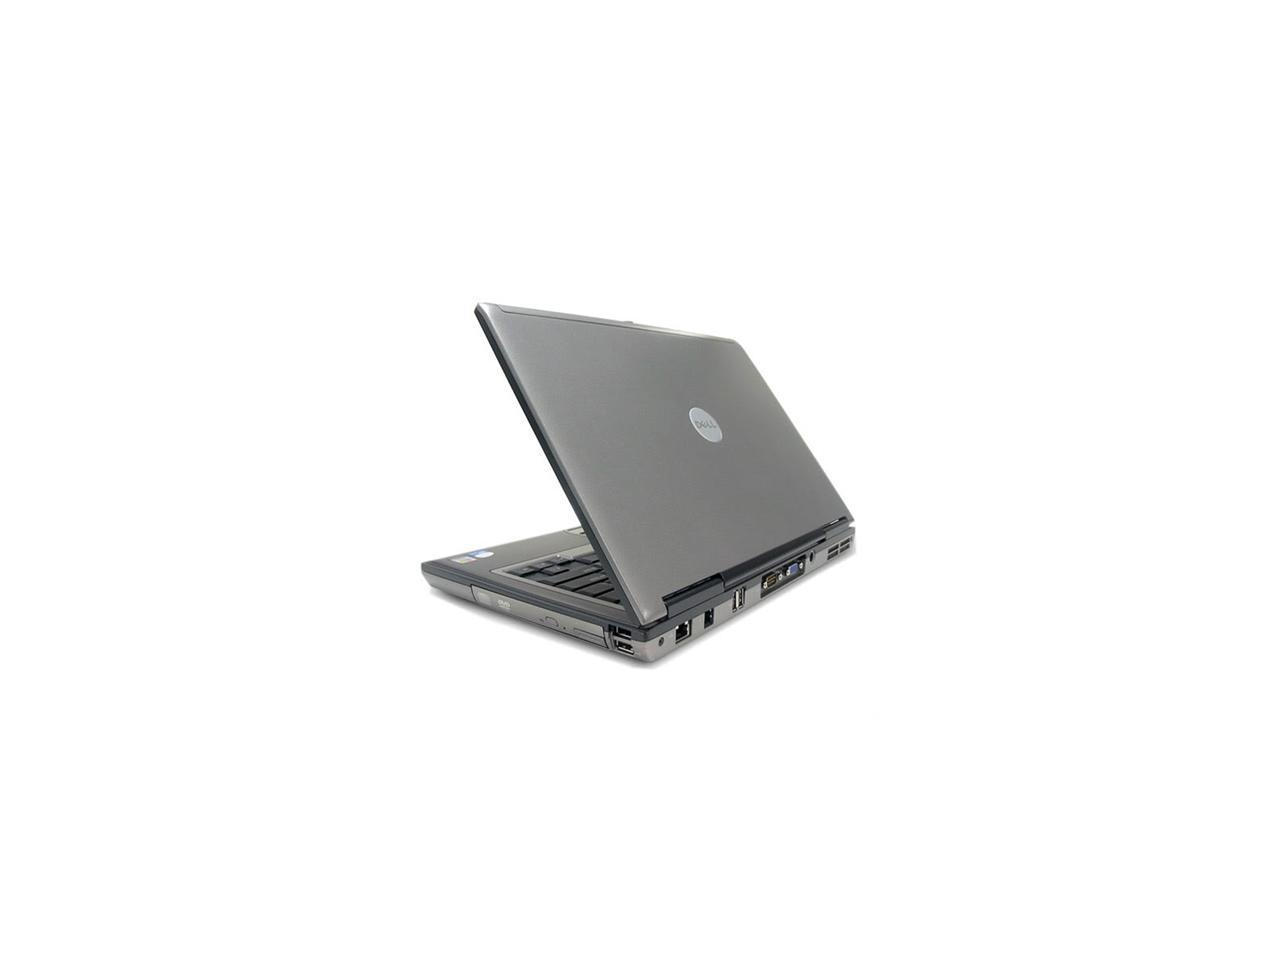 Refurbished: Dell Latitude D620 Laptop Computer - Intel Dual Core - 2GB